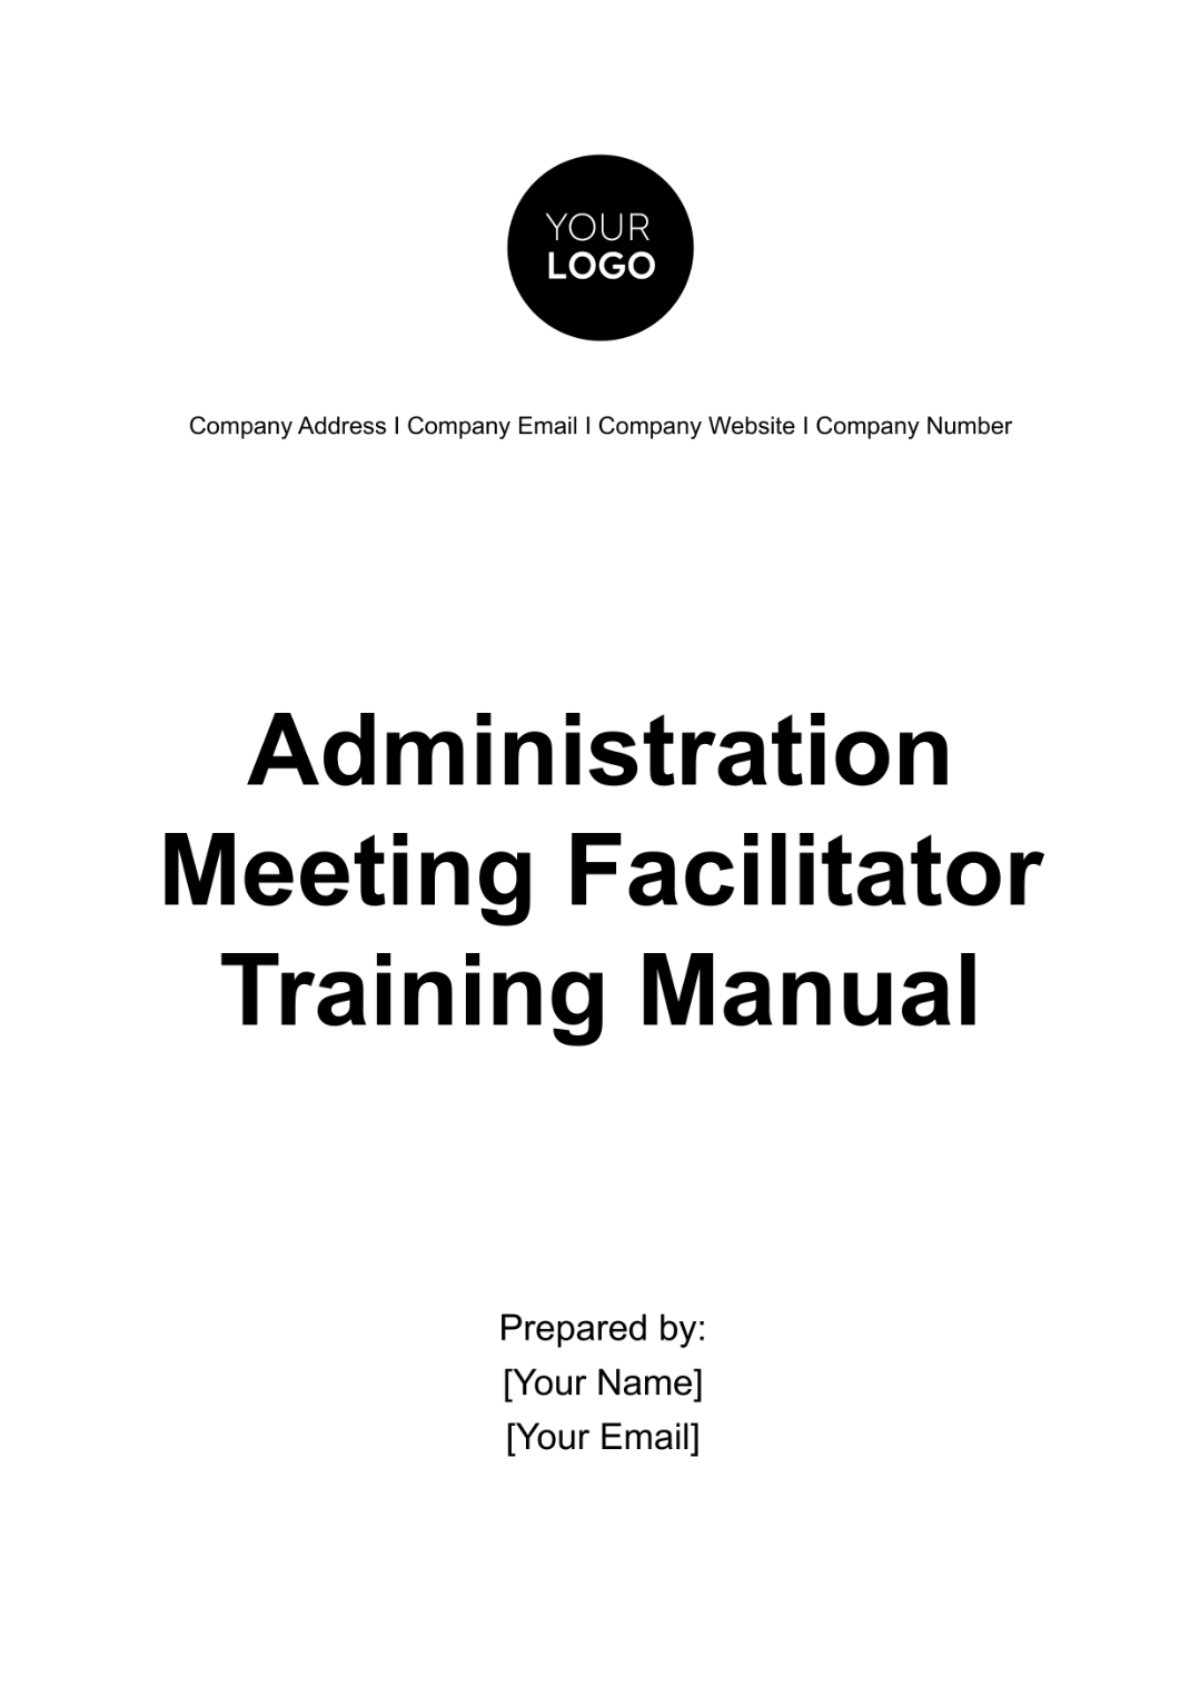 Administration Meeting Facilitator Training Manual Template